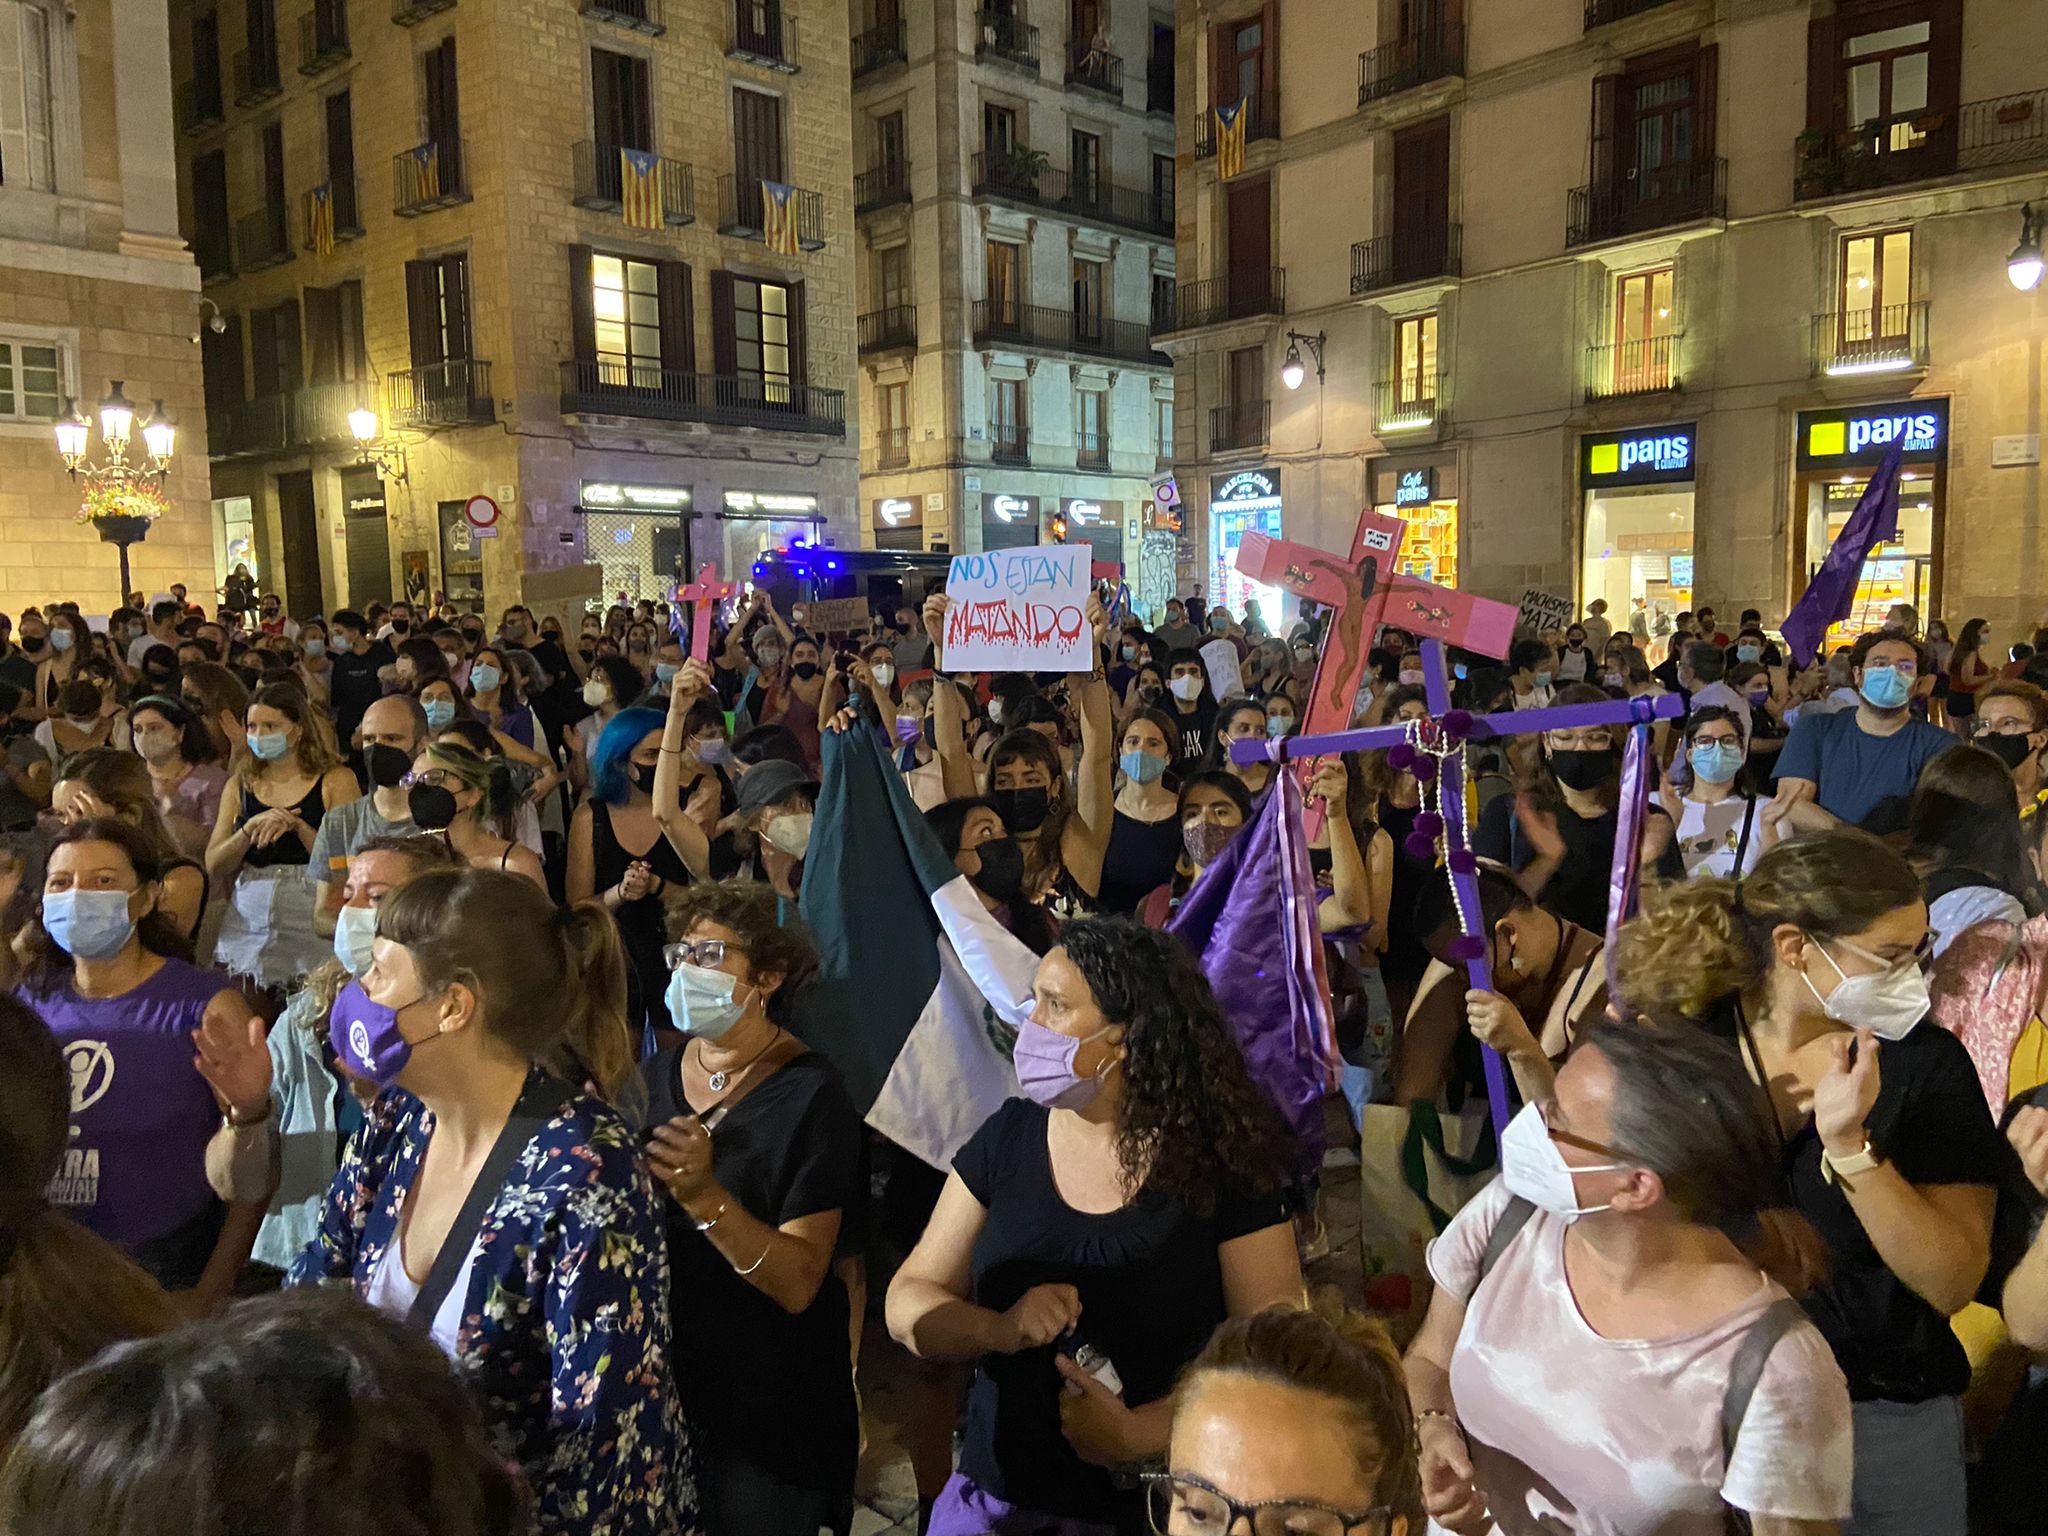 Eruption of protest against male violence after shocking crimes around Spain